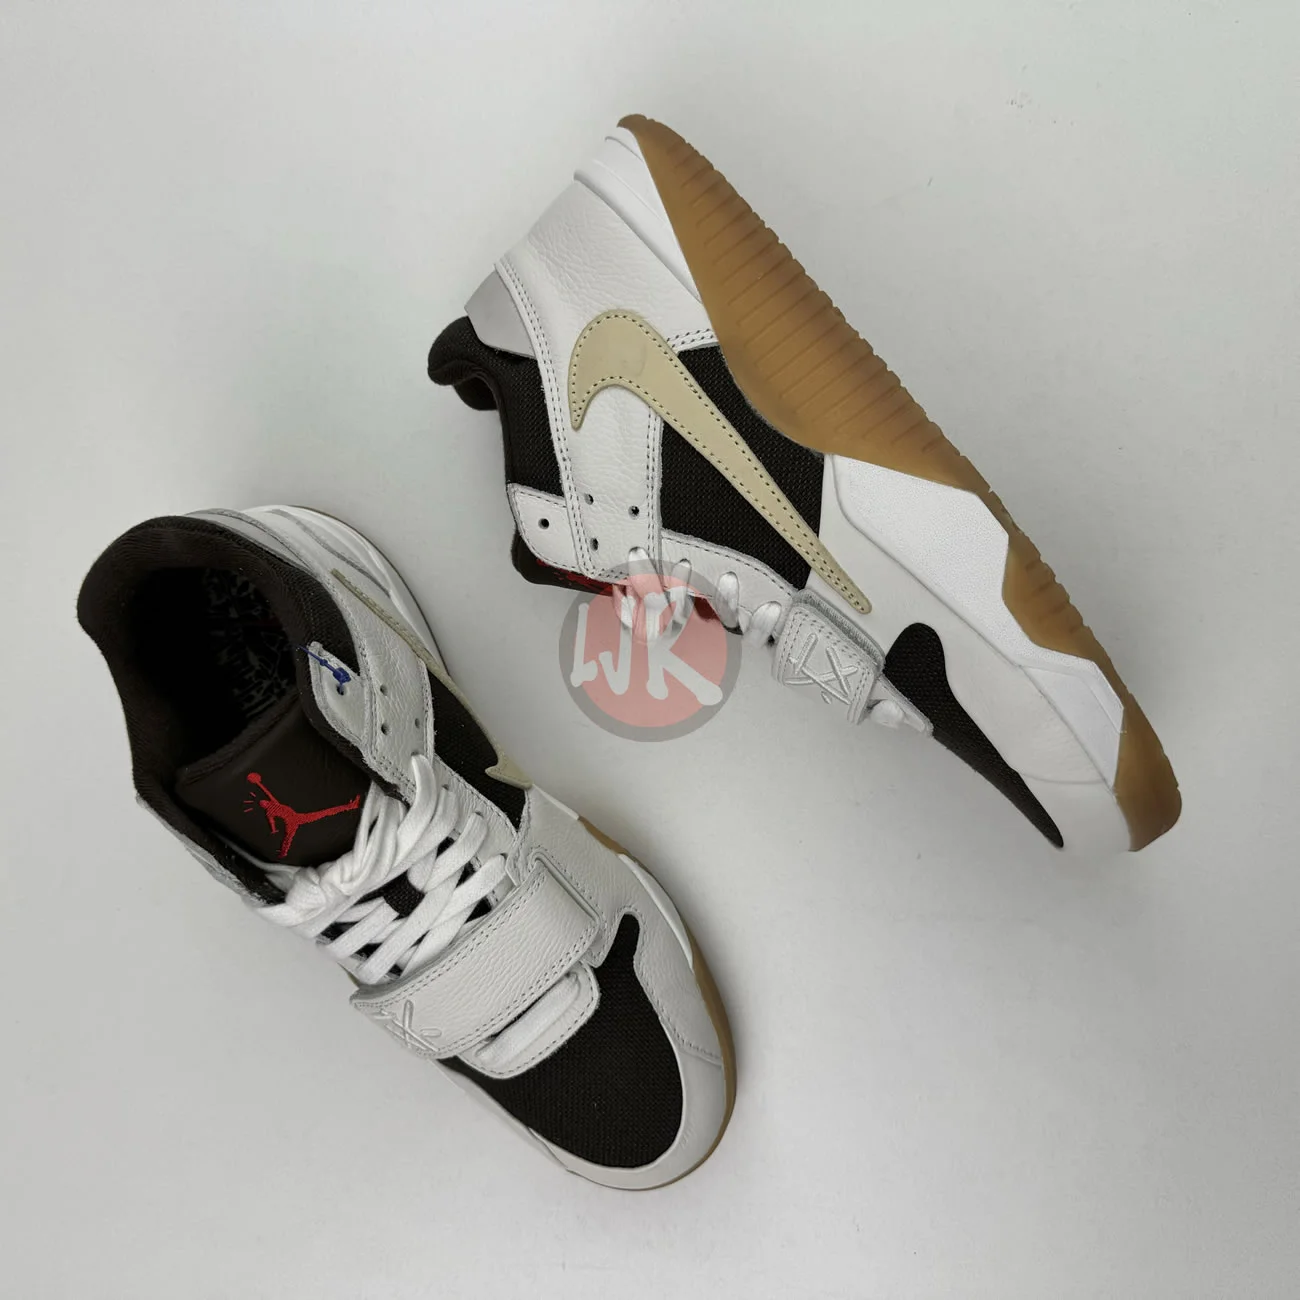 Travis Scott X Jordan Cut The Check Trainer Release Date Ljr Sneakers (6) - bc-ljr.net